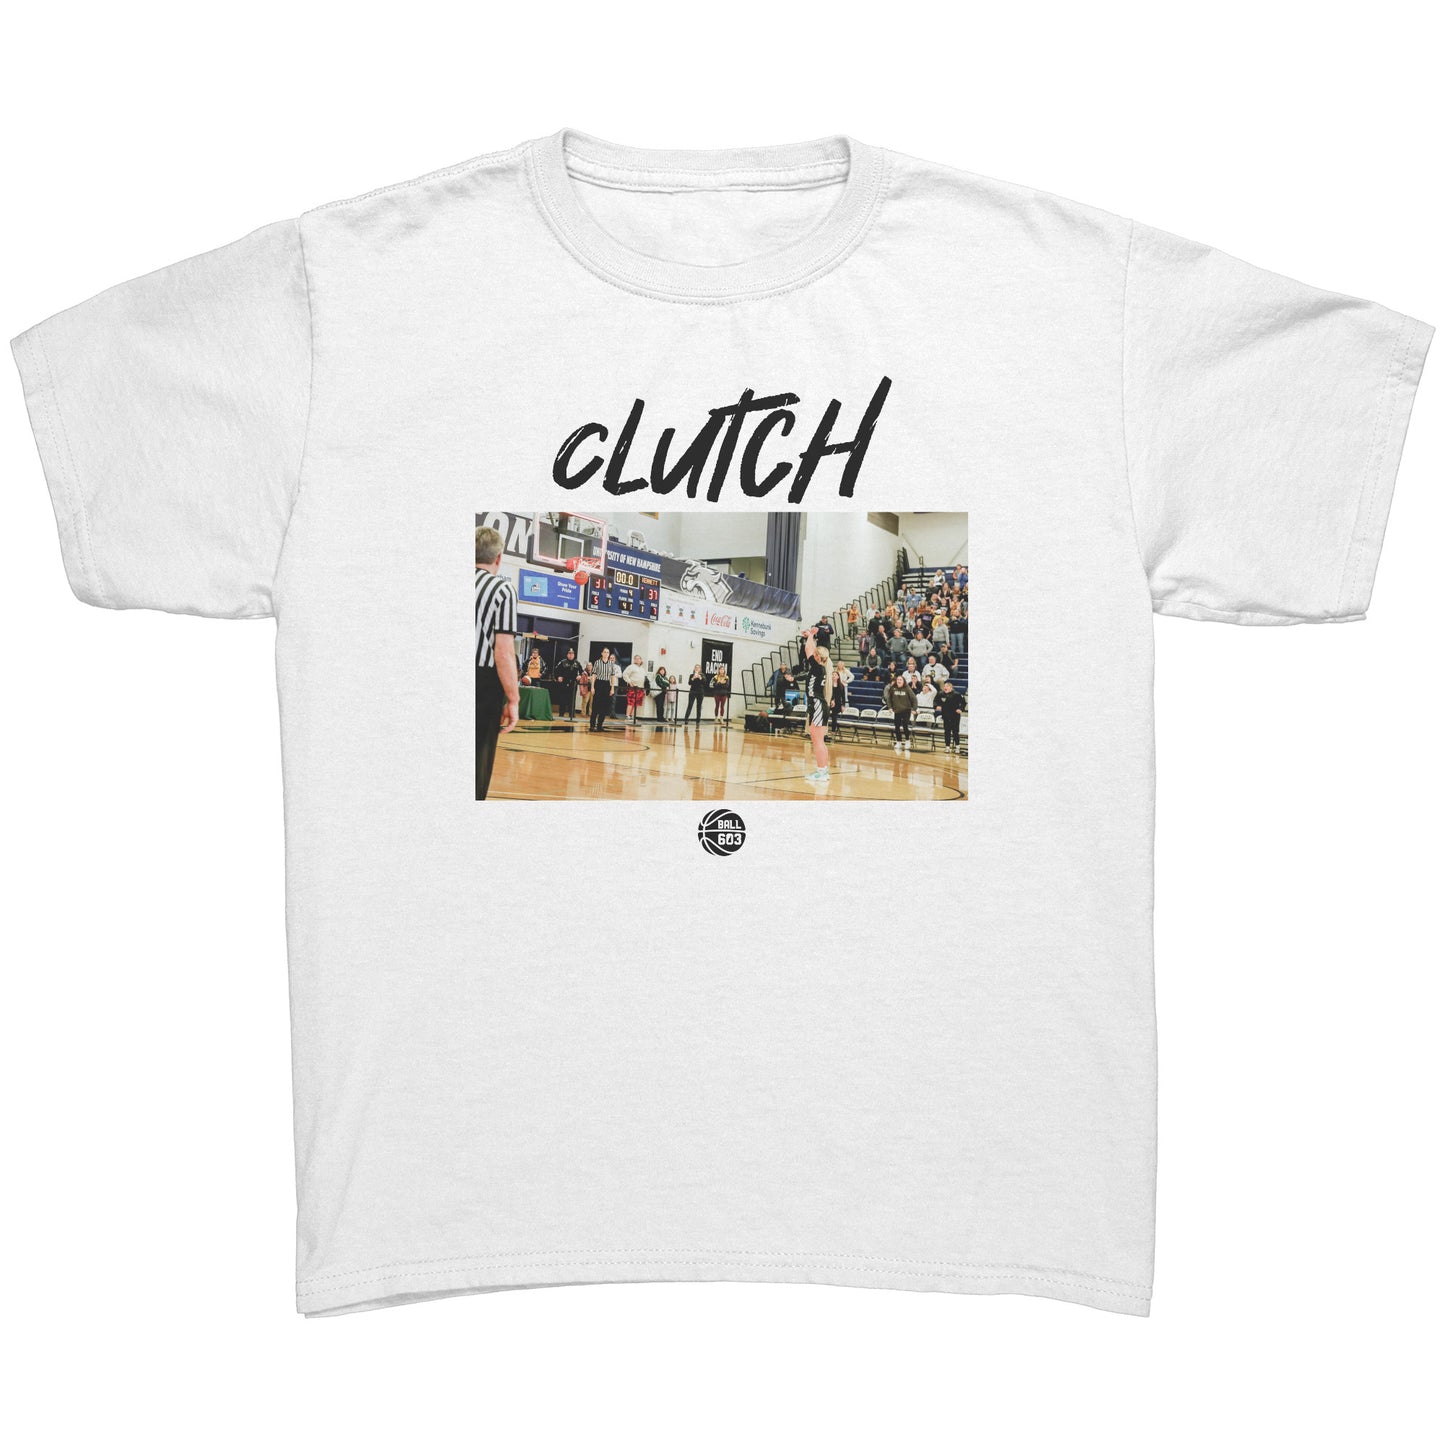 Clutch: Youth T-Shirt